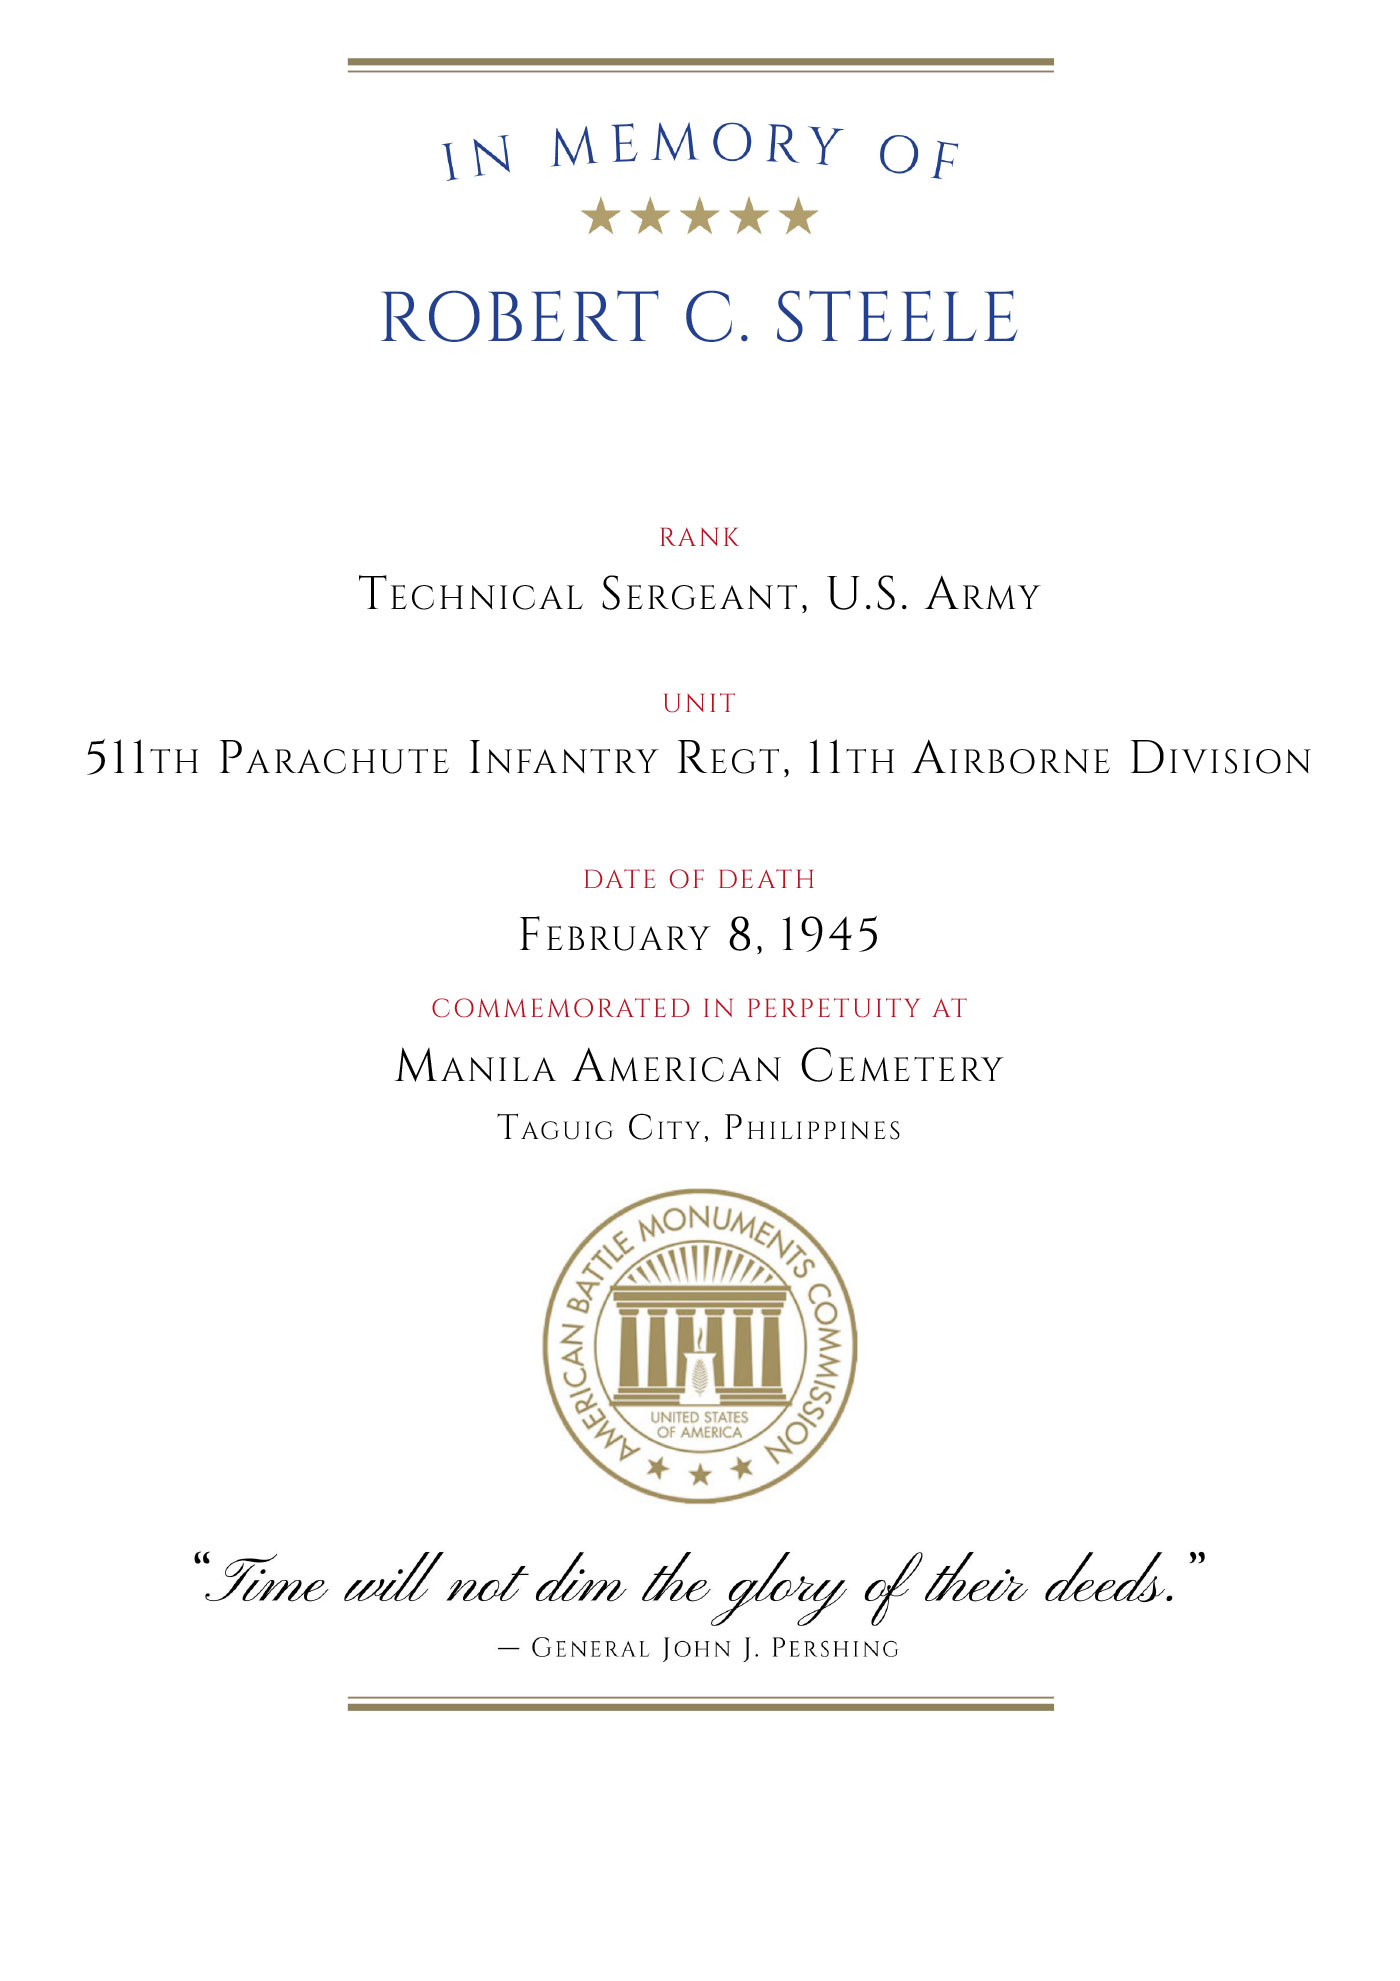 Robert Steele 511th Parachute Infantry Regiment